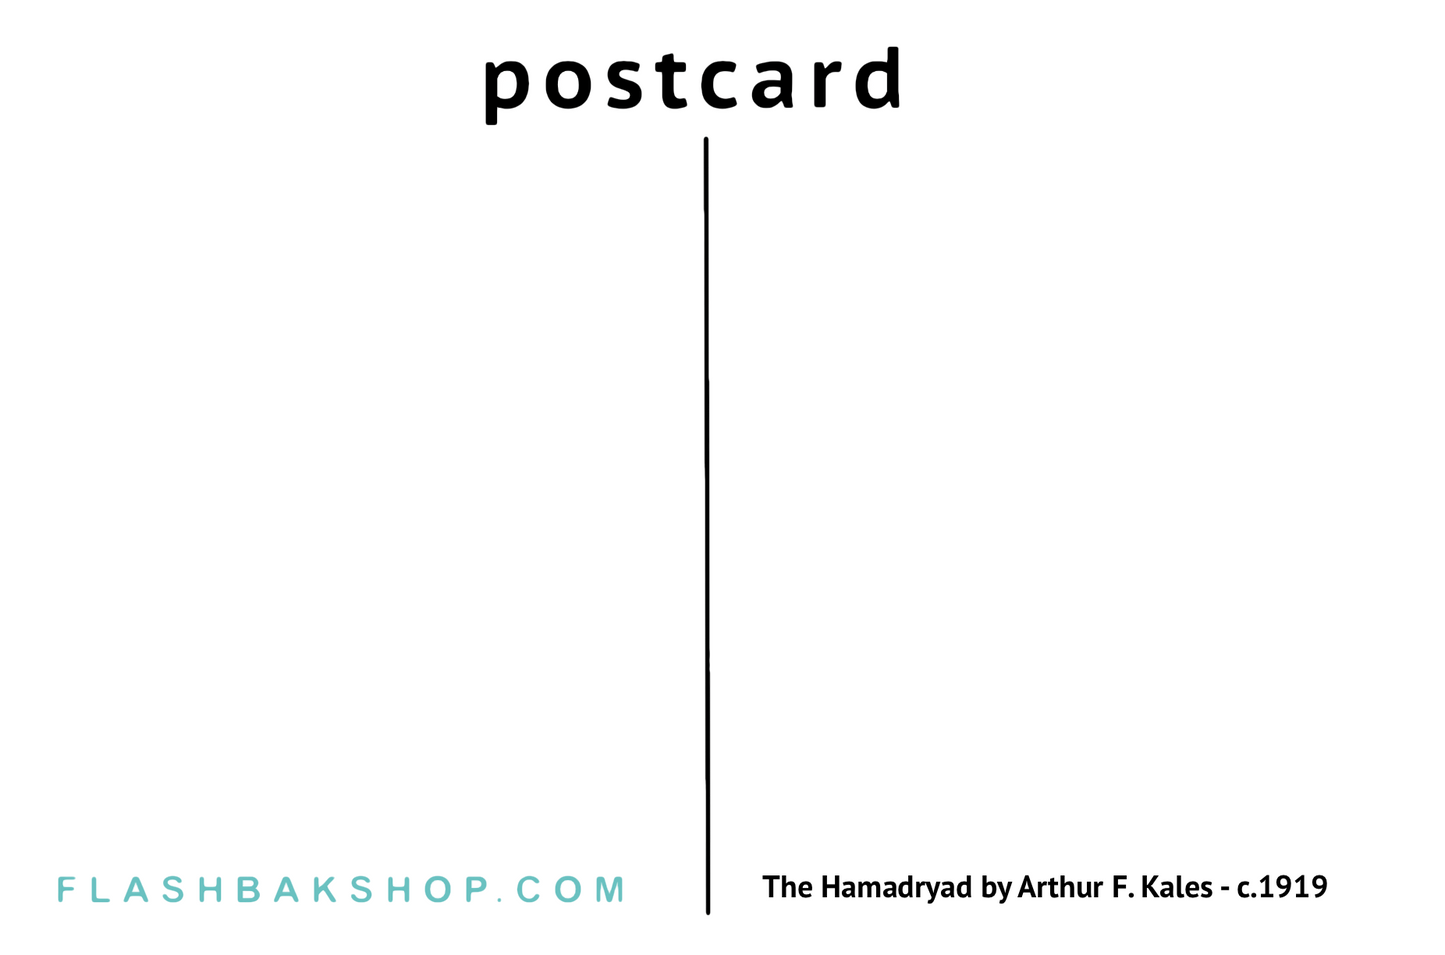 La Hamadryade par Arthur F. Kales - vers 1919 - Carte postale